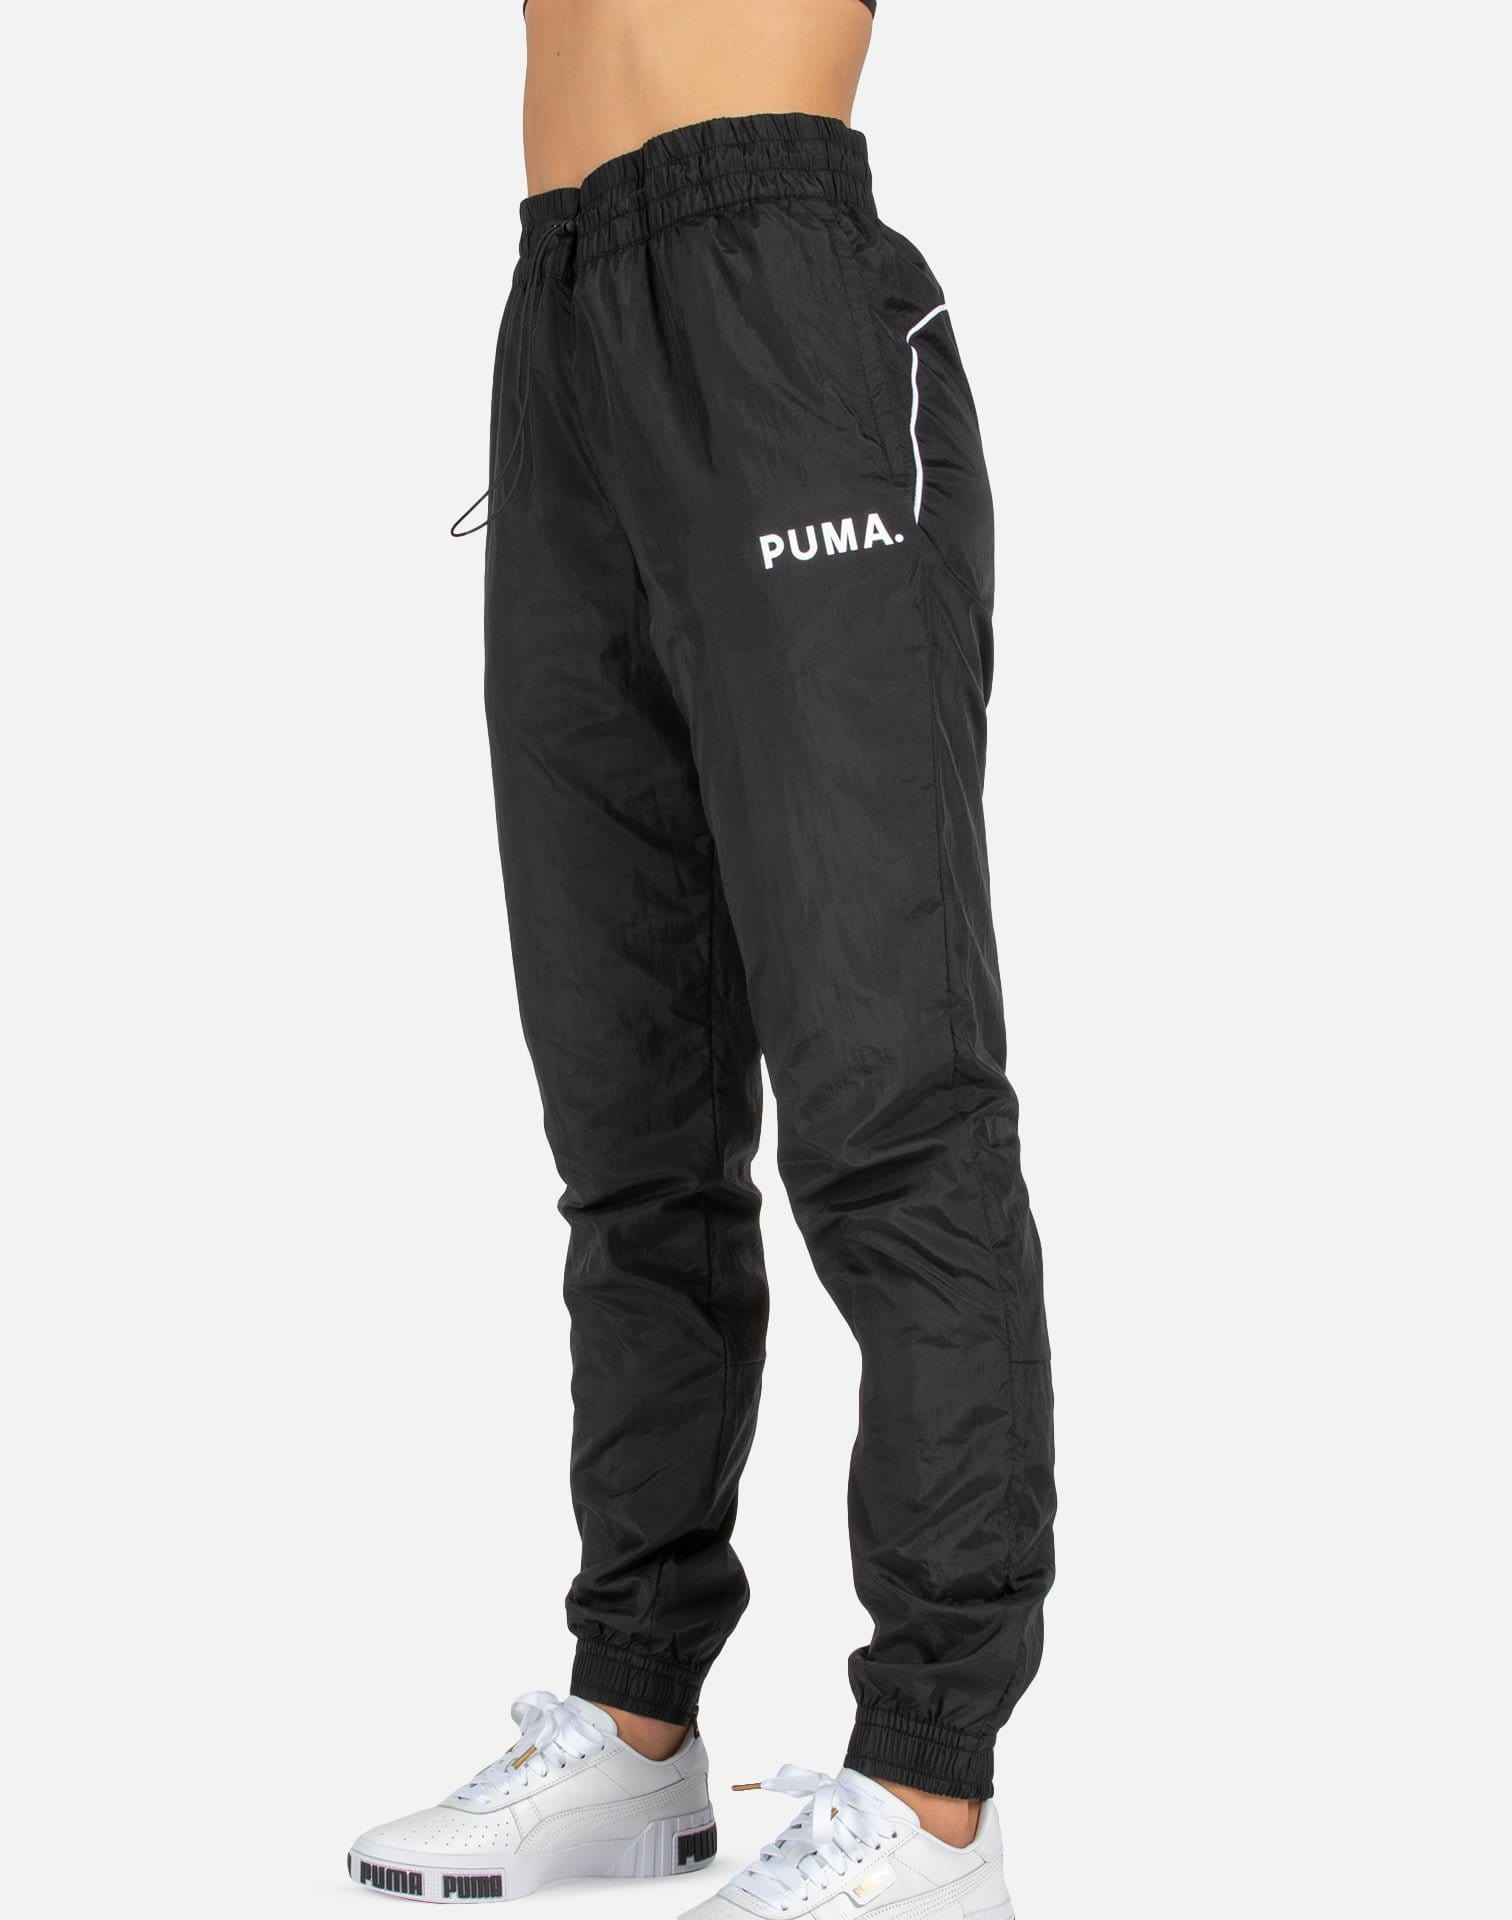 PUMA Women's Chase Woven Pants